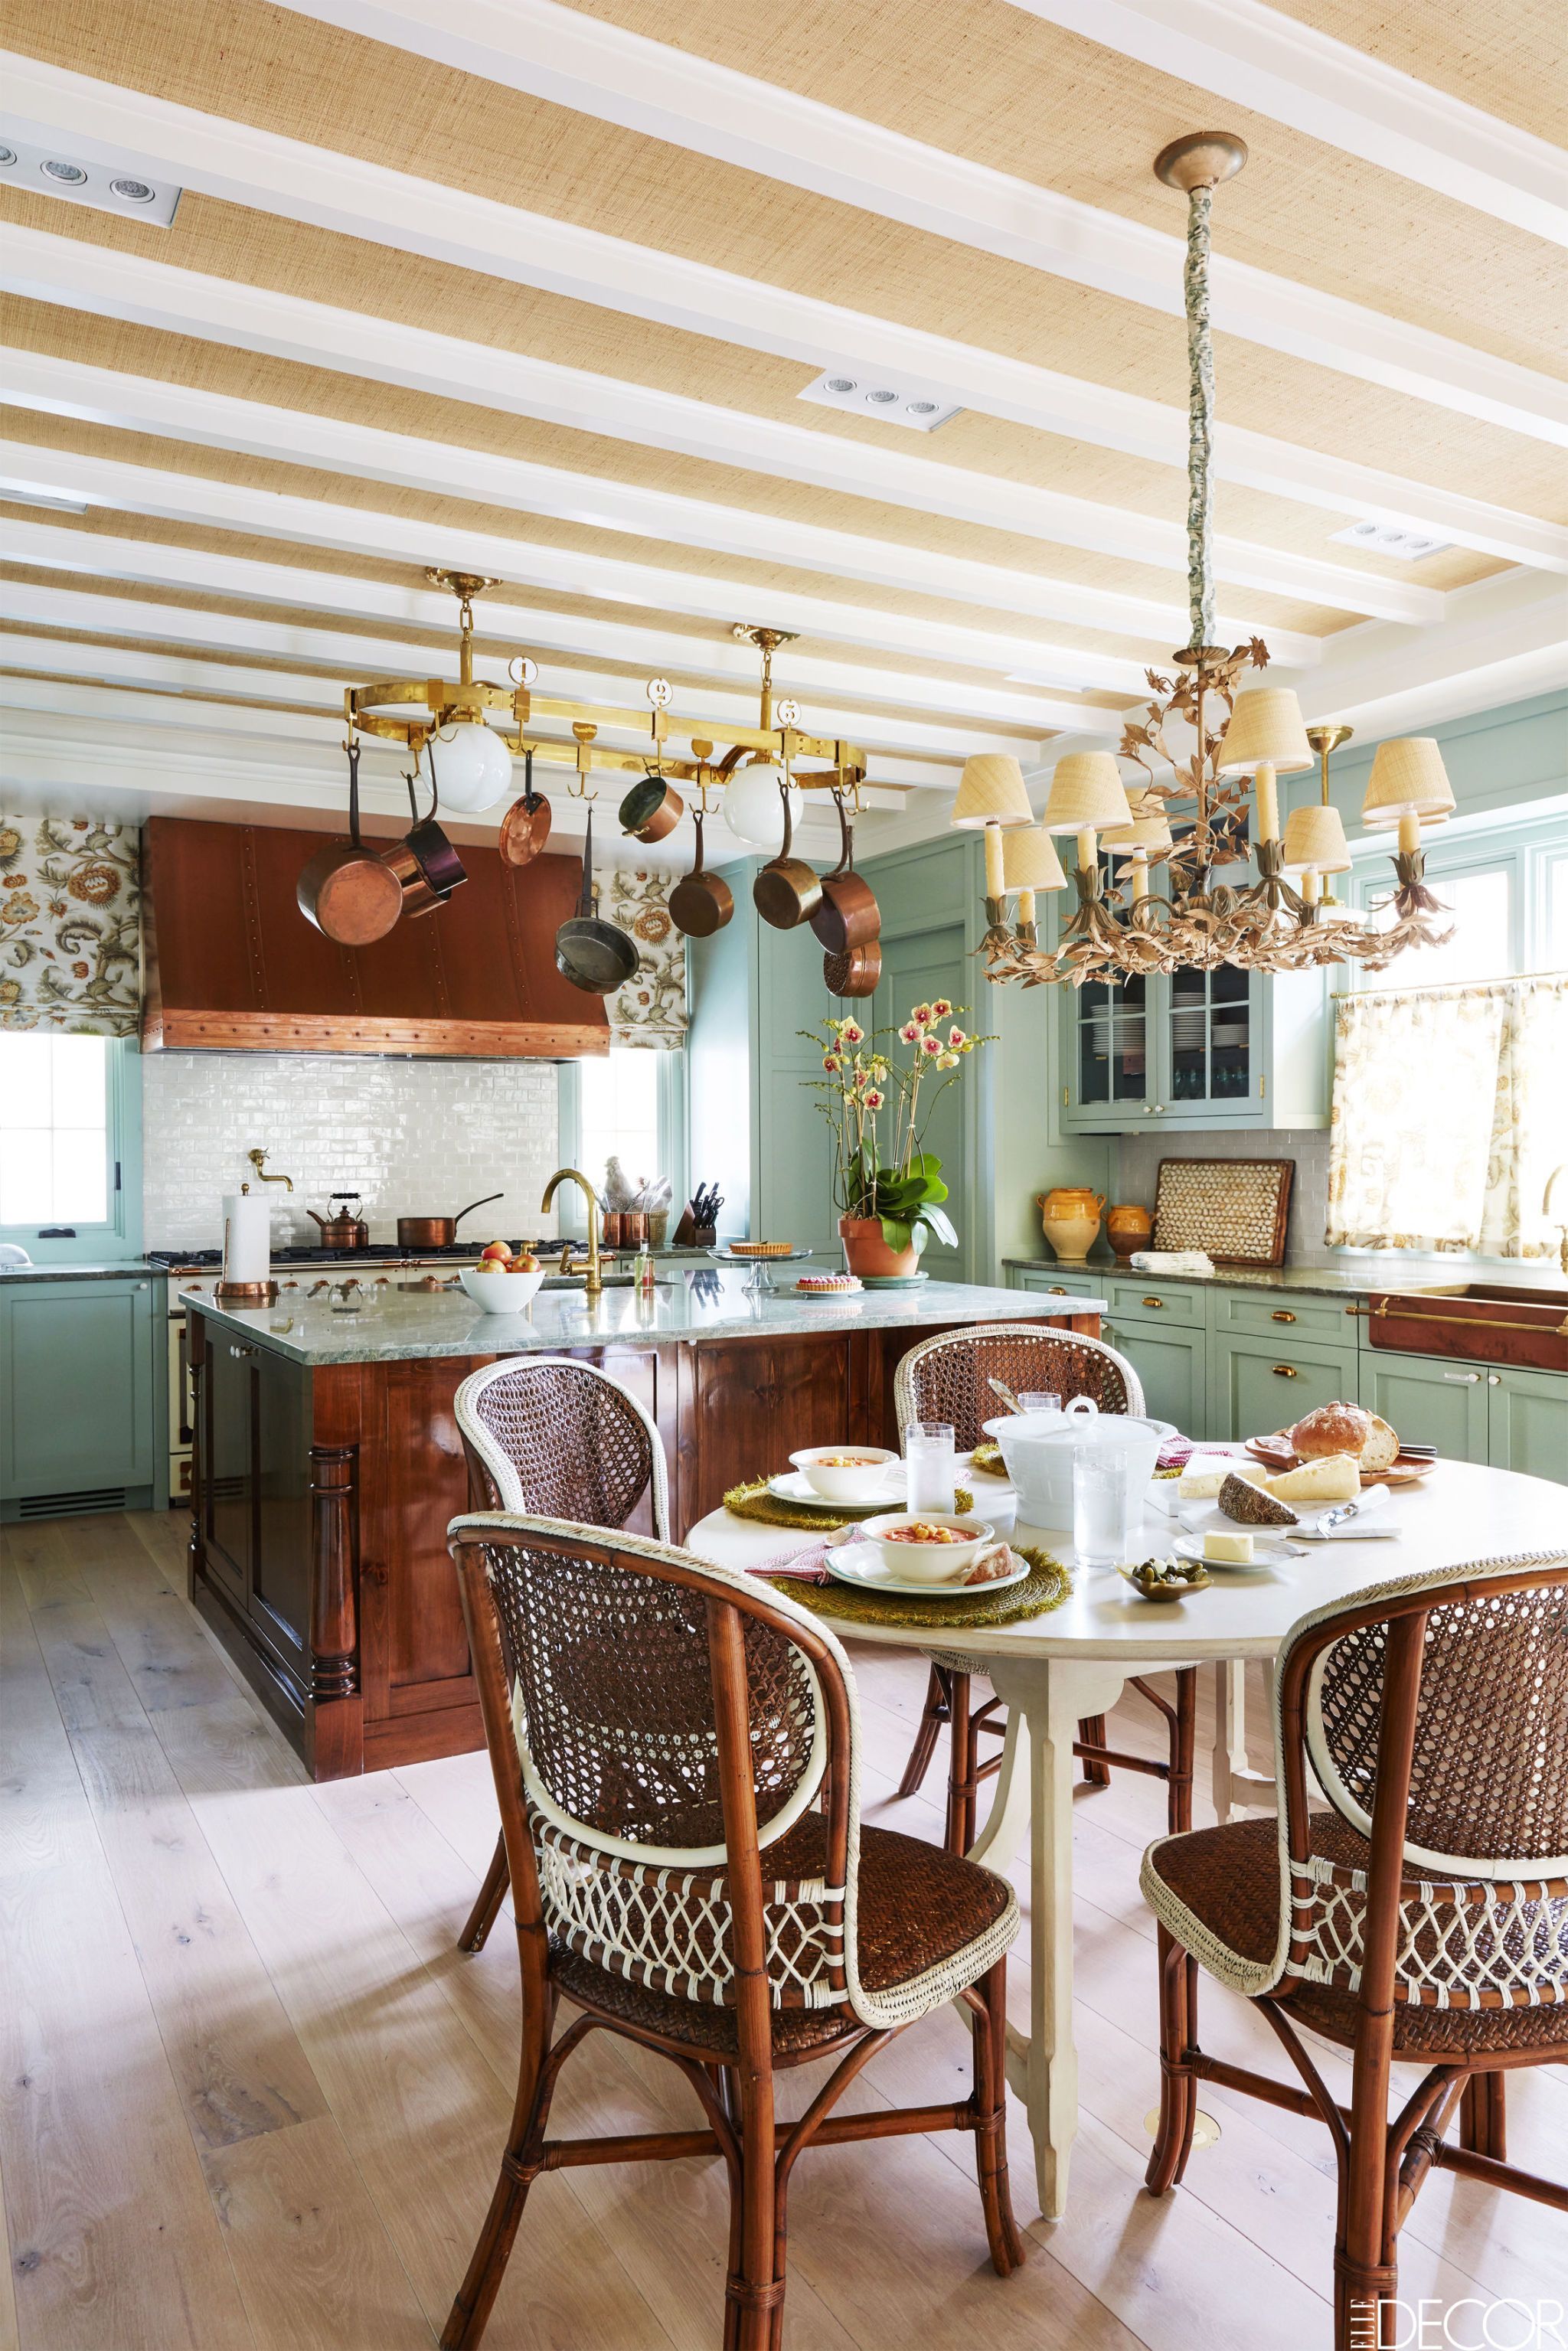 20 Rustic Kitchen Decor Ideas   Country Kitchens Design